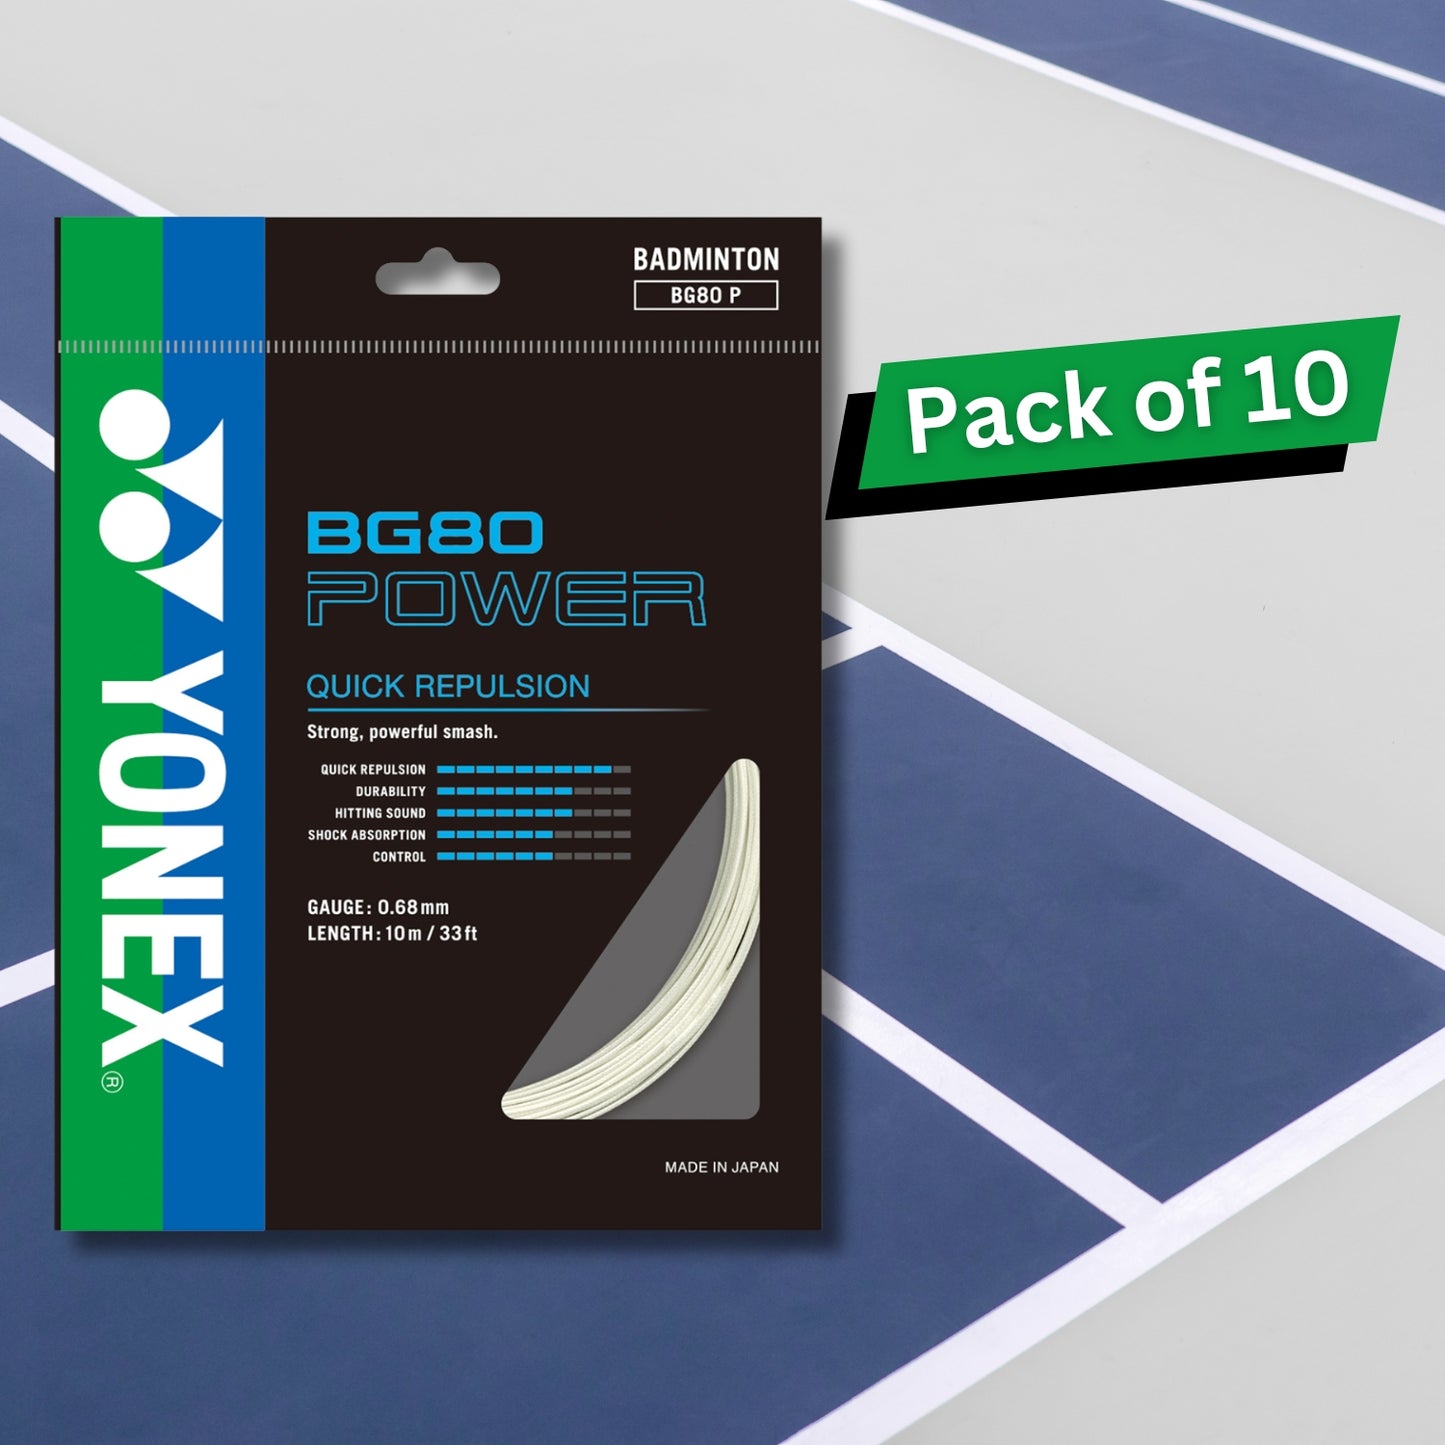 Yonex BG80 Power Badminton Strings, 0.68mm - Pack of 10 Strings - Best Price online Prokicksports.com